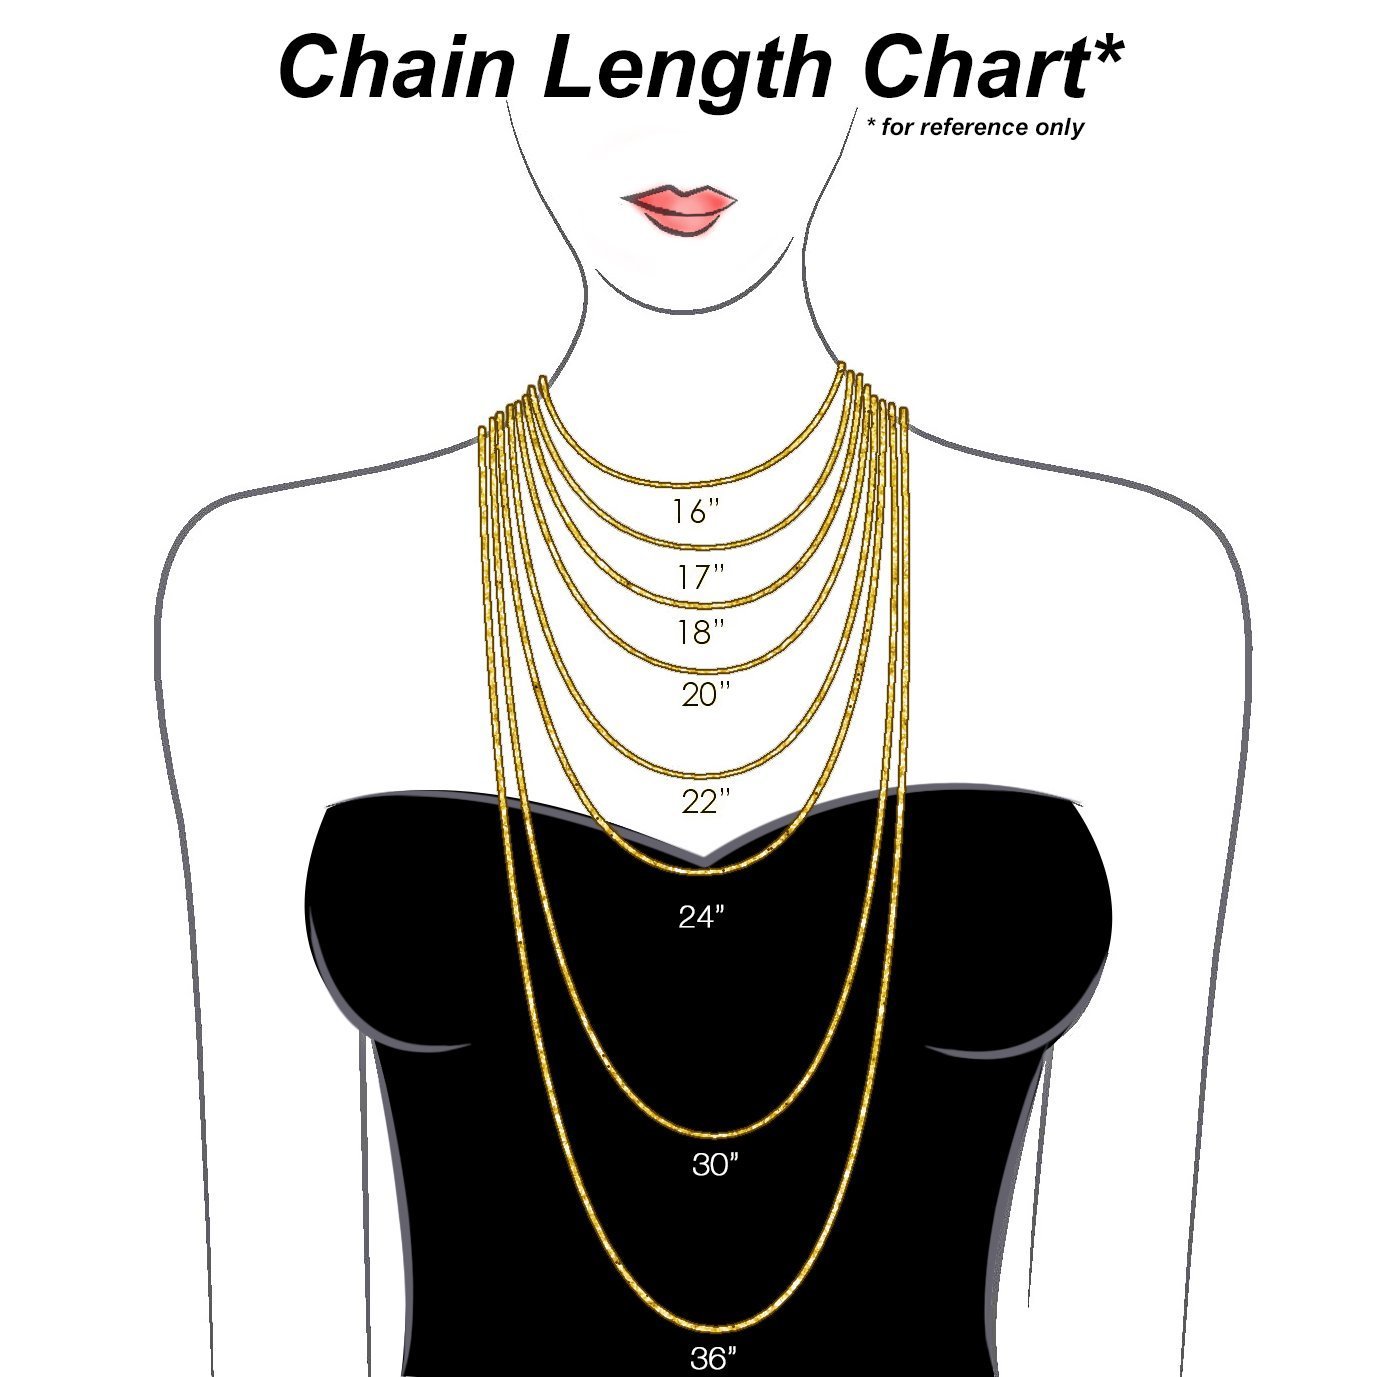 chain length chart rev 23 1